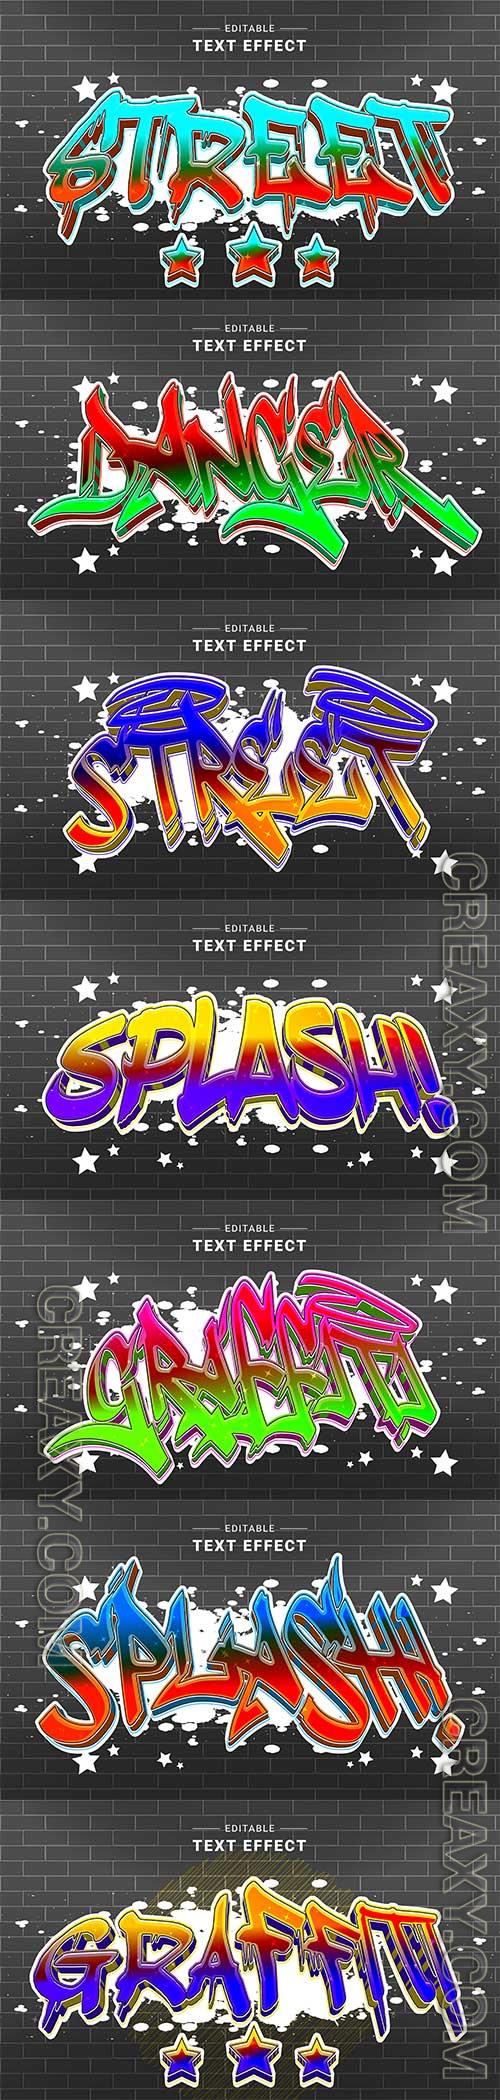 Graffiti text effect editable spray street text style